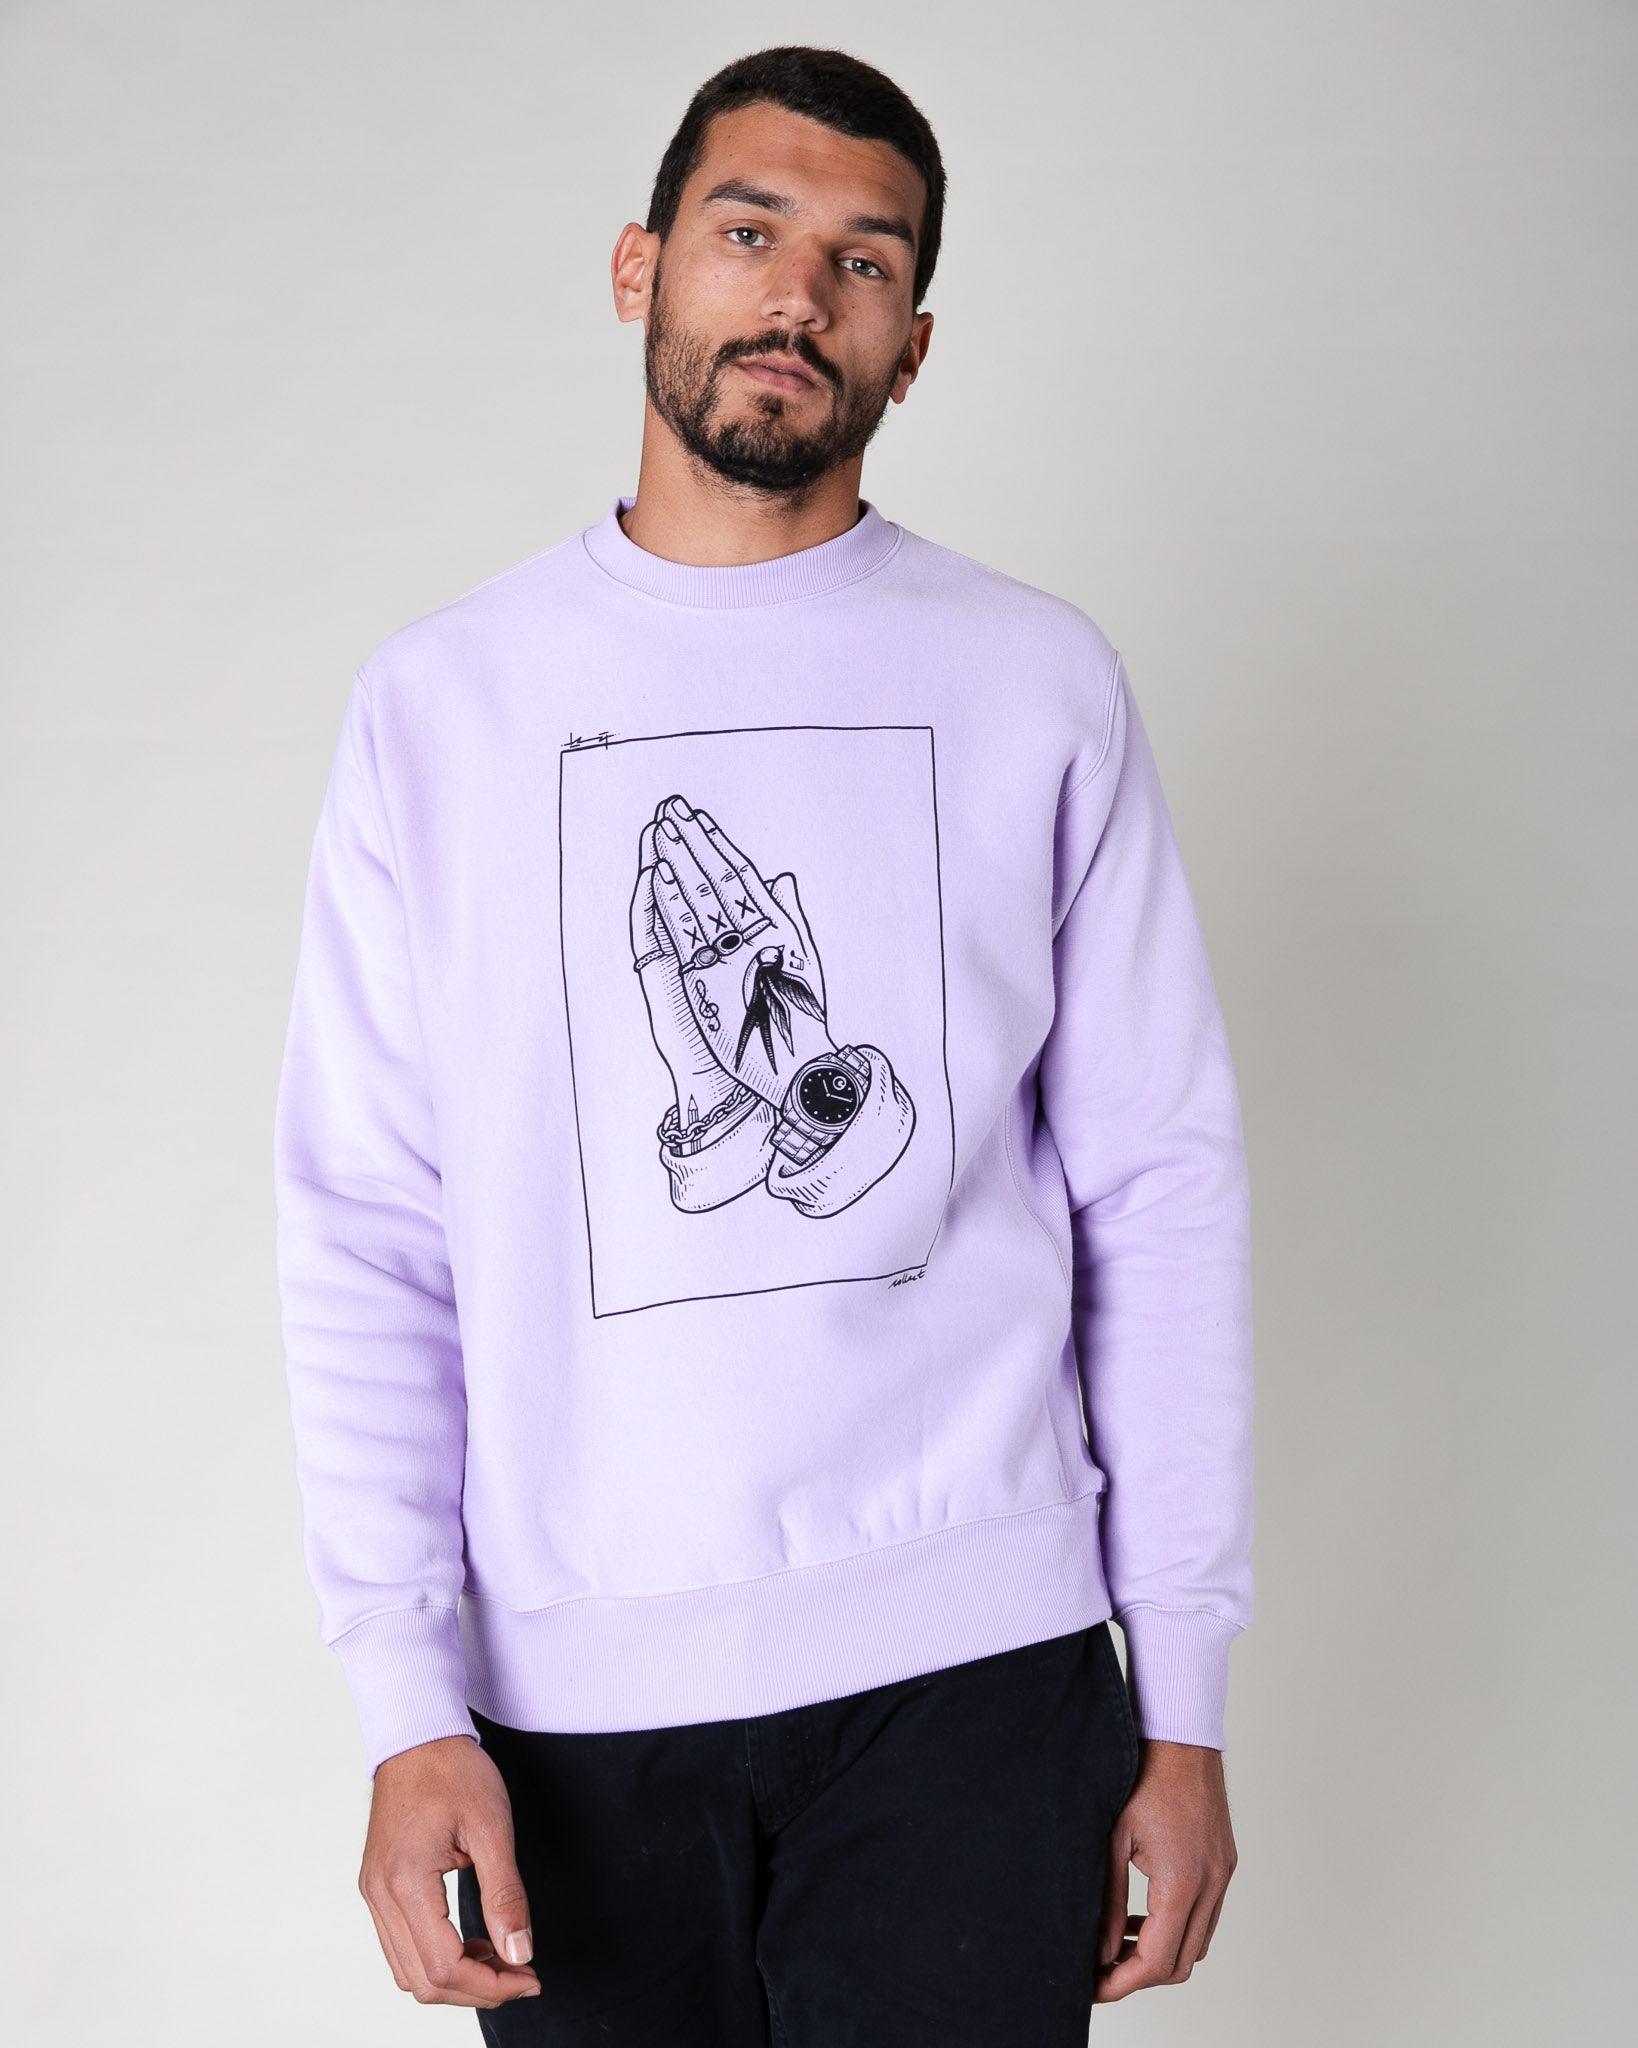 Sweater de oración lila